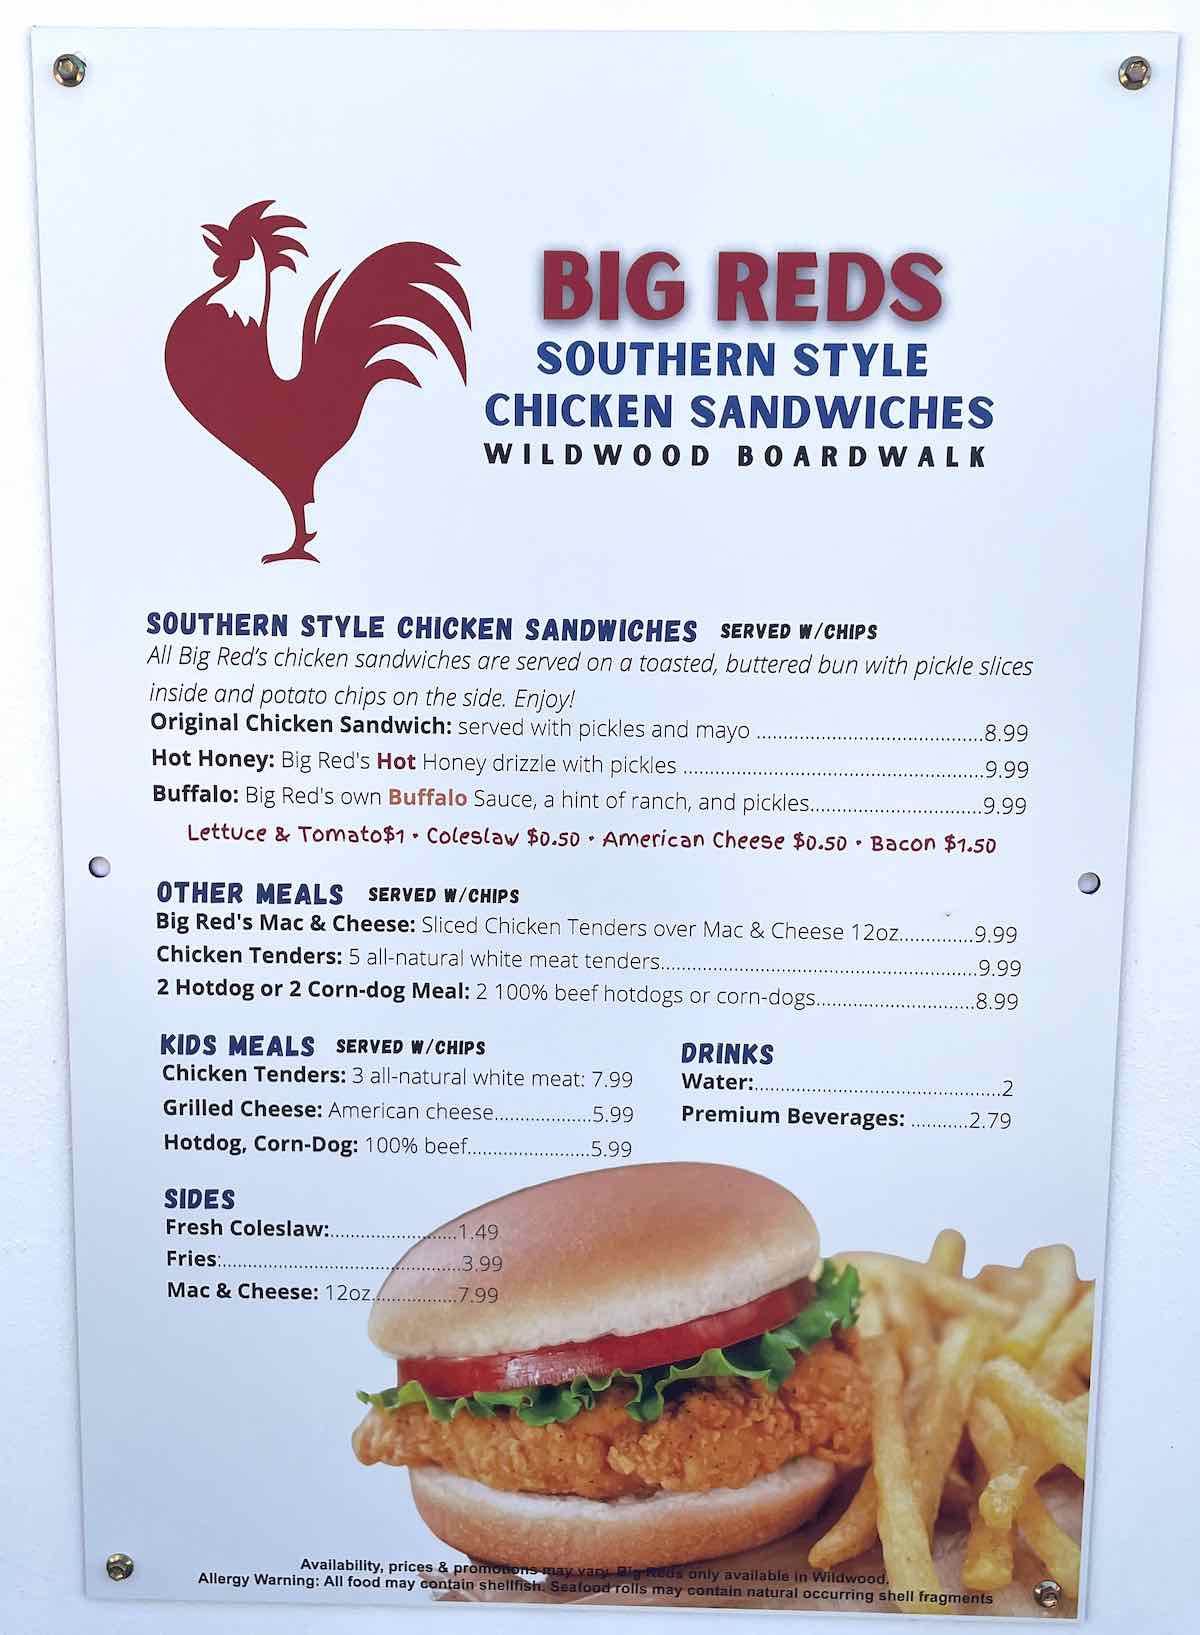 Big Reds Southern Style Chicken Sandwiches Menu on Wildwood Boardwalk